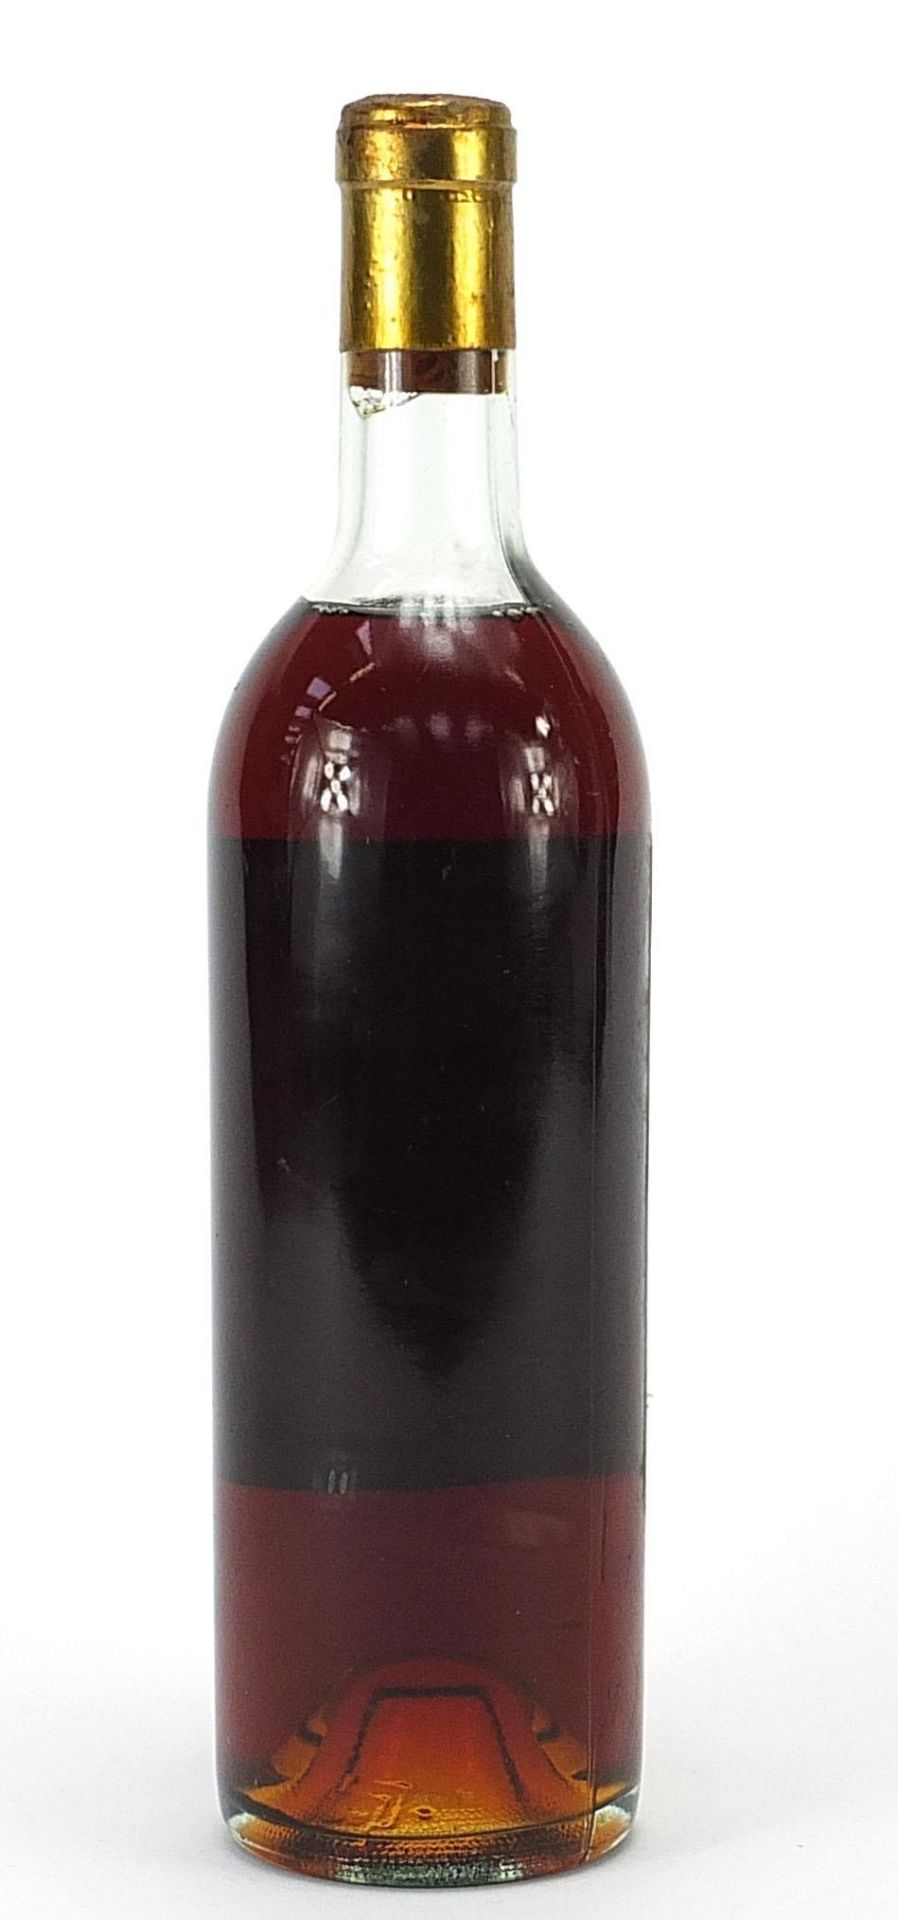 Bottle of 1966 Chateau Rabaud Promis Sauternes - Image 2 of 2